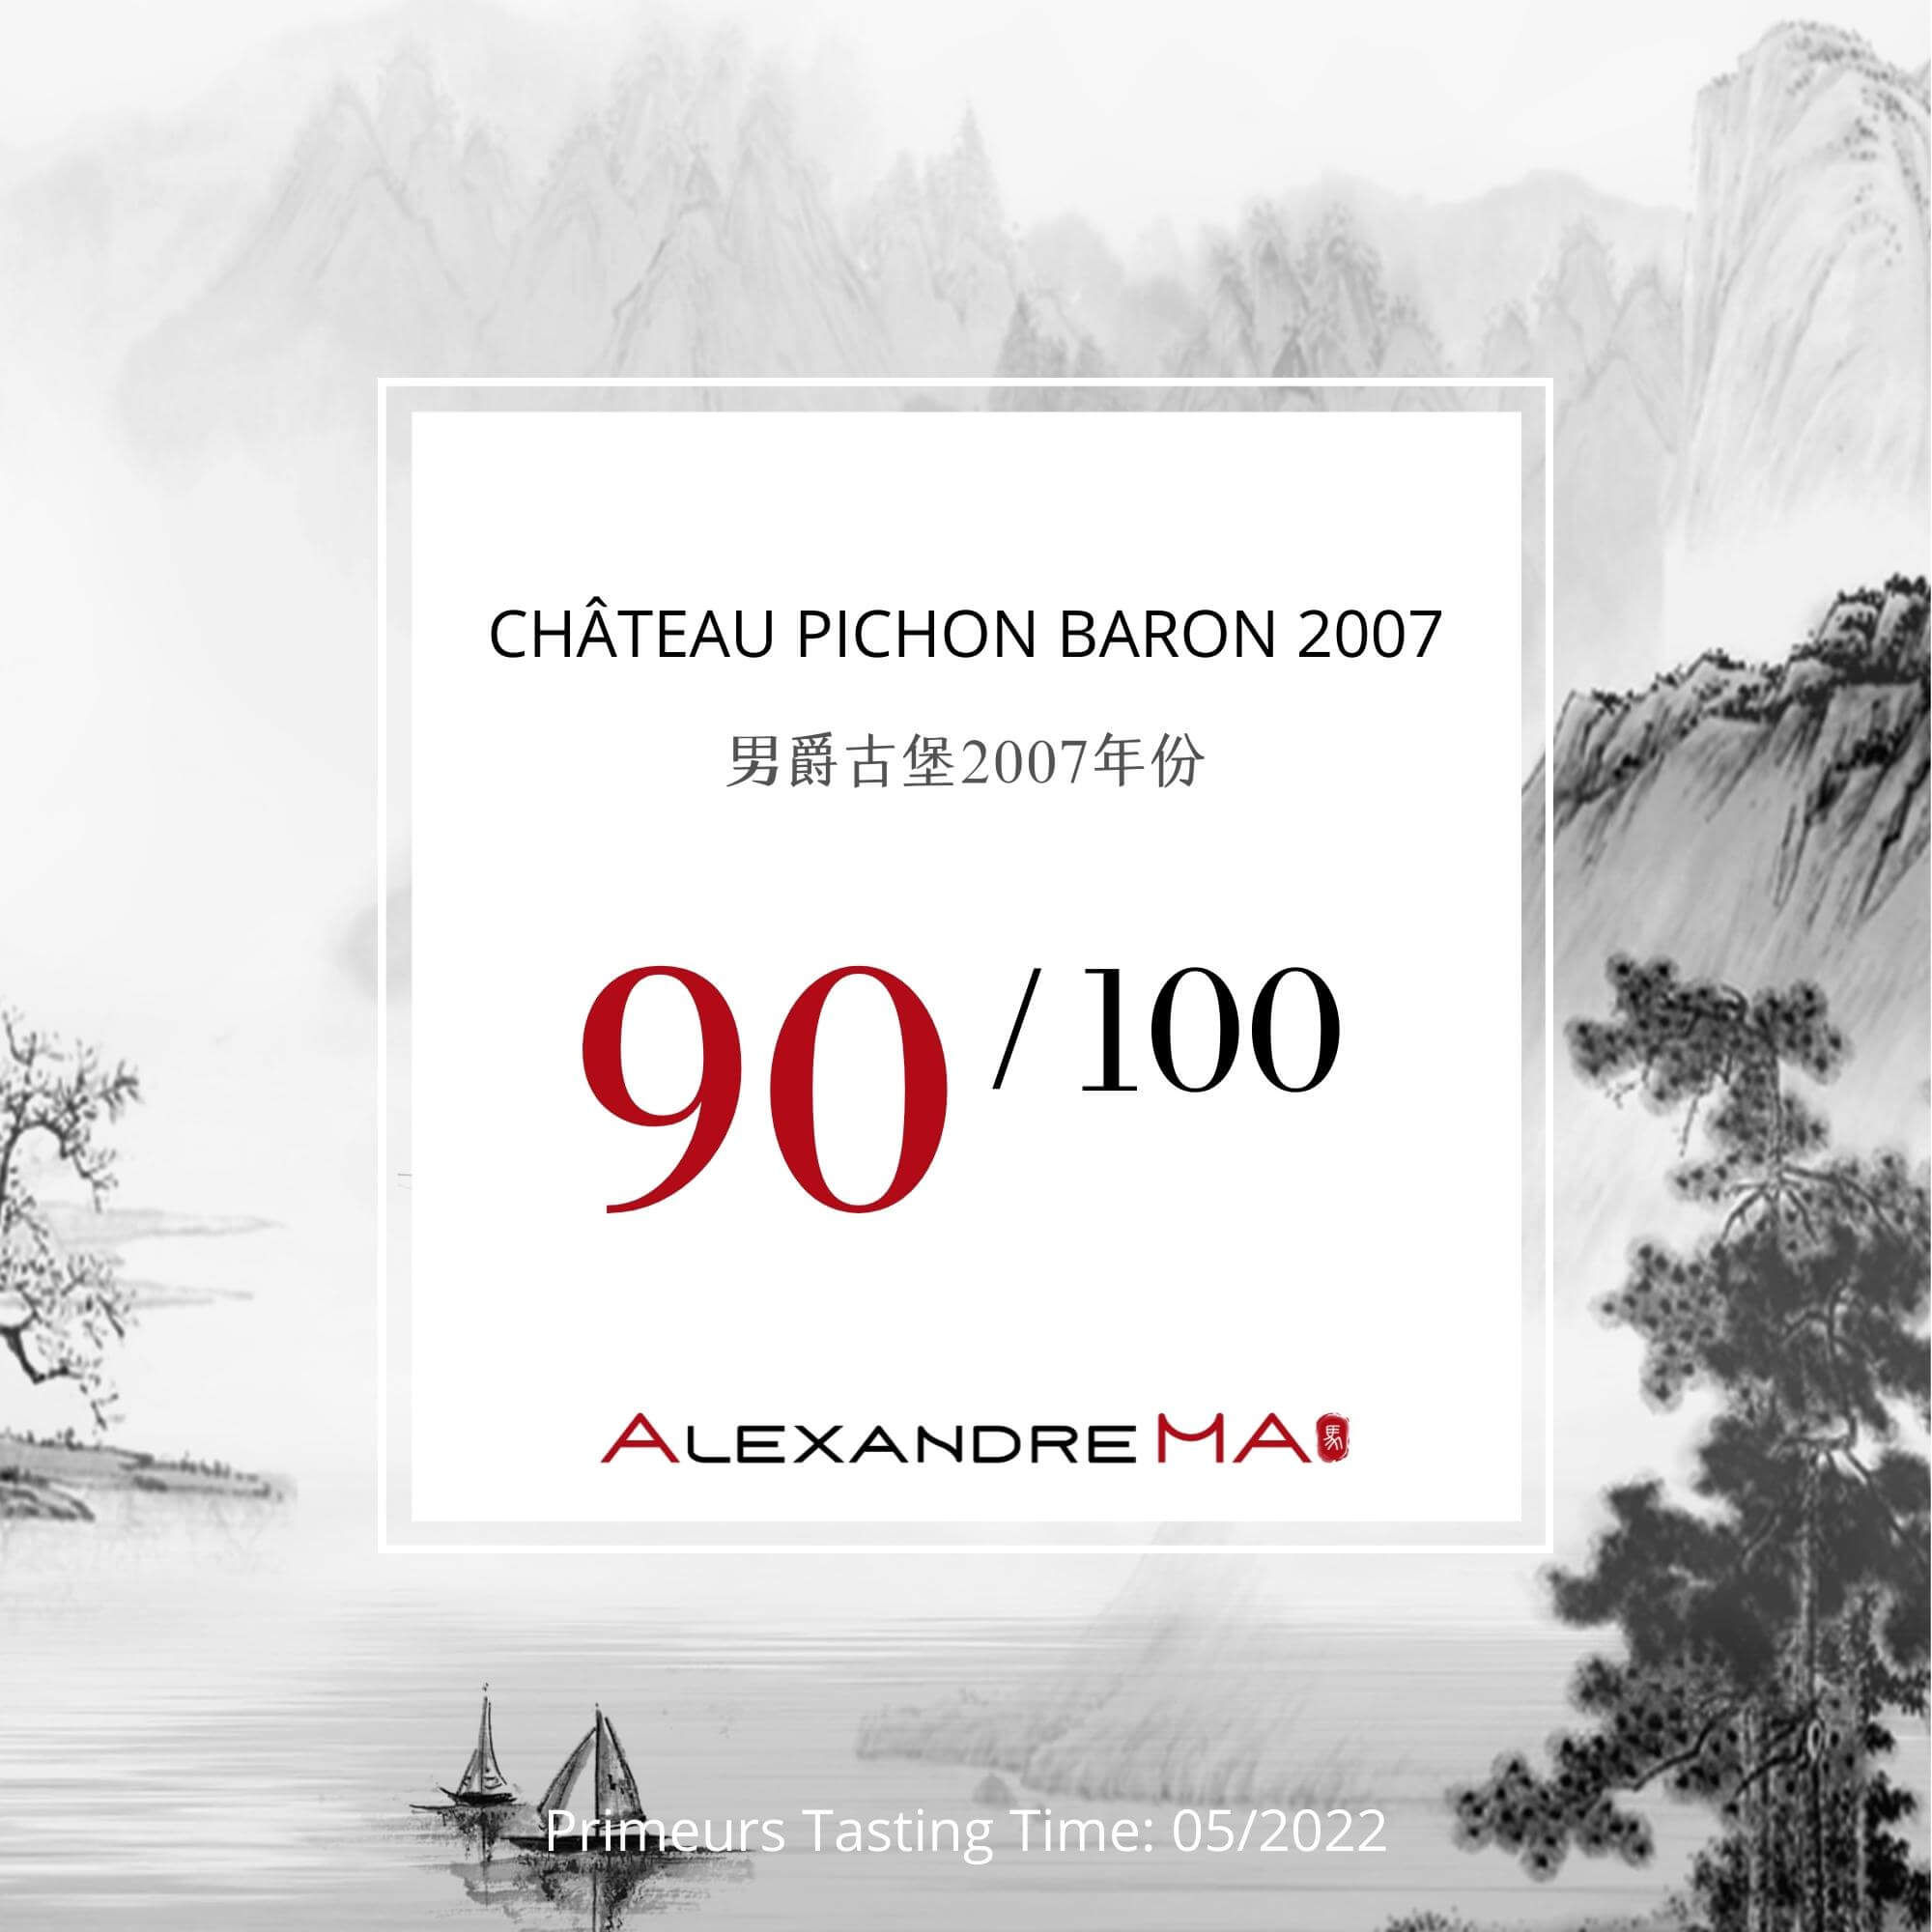 Château Pichon Baron 2007 - Alexandre MA